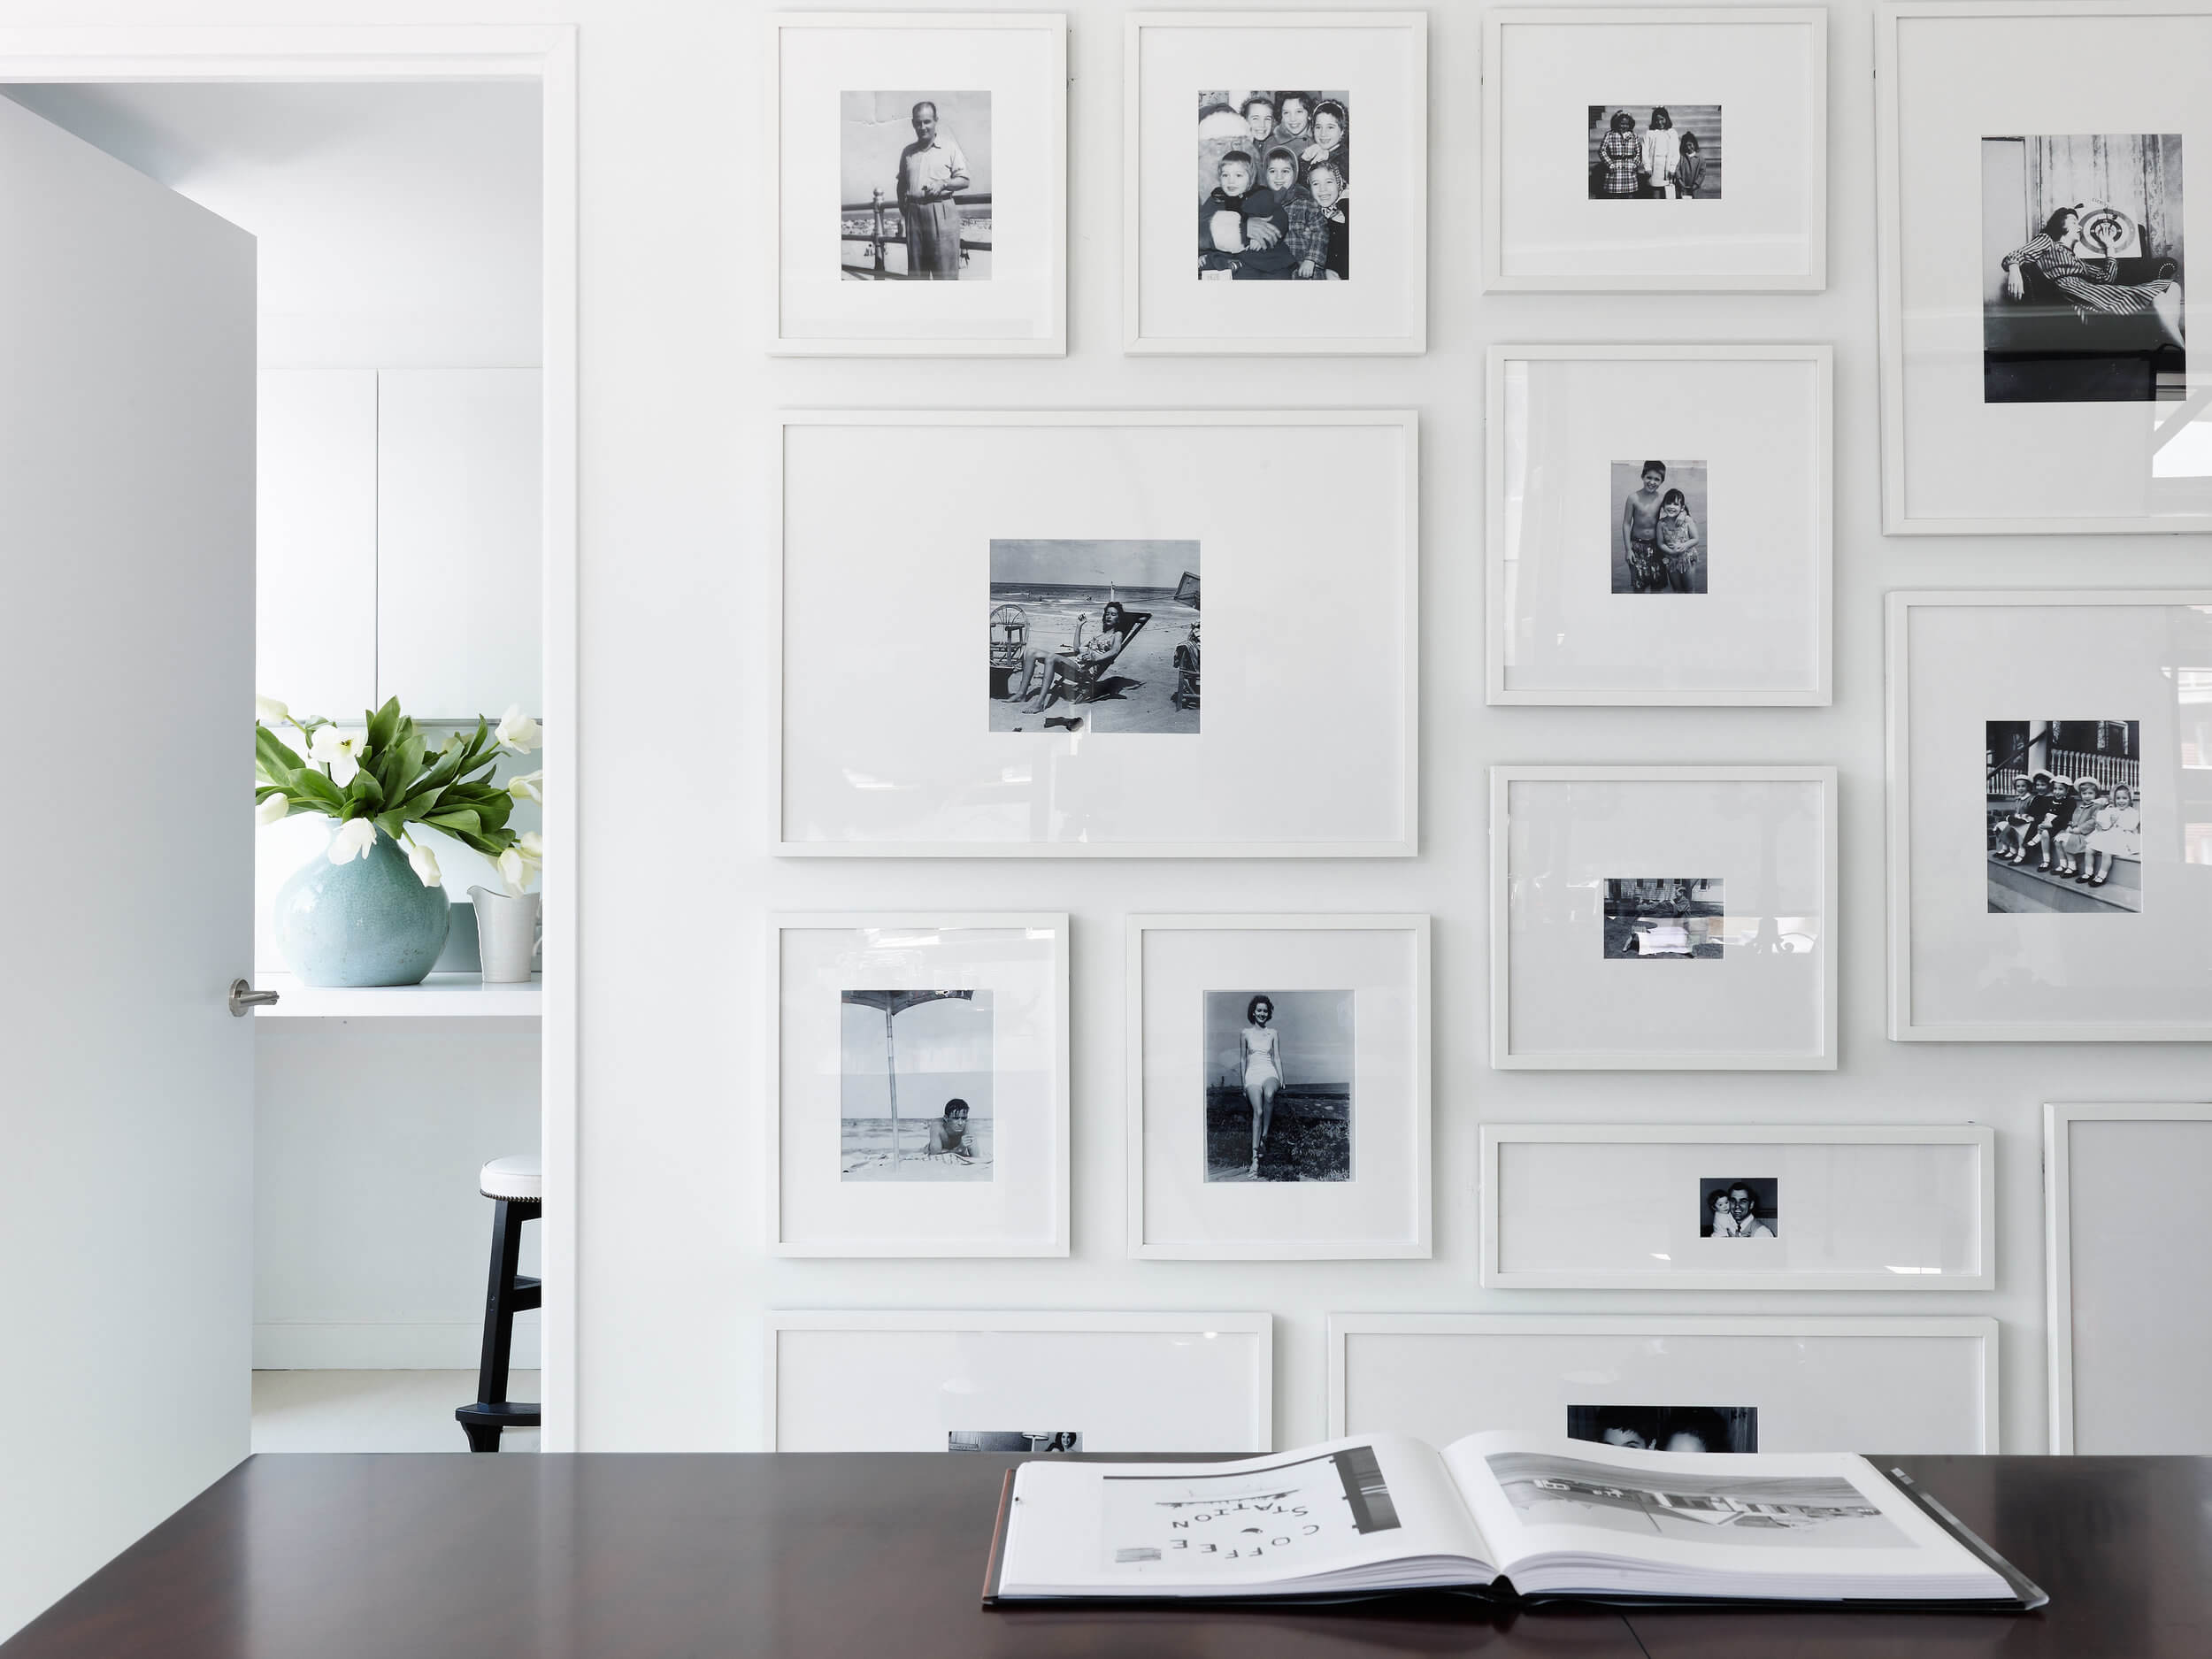 Estimado Iniciar sesión Accidentalmente Descubre las 5 tendencias para decorar tus paredes con fotos - Noveno Ce